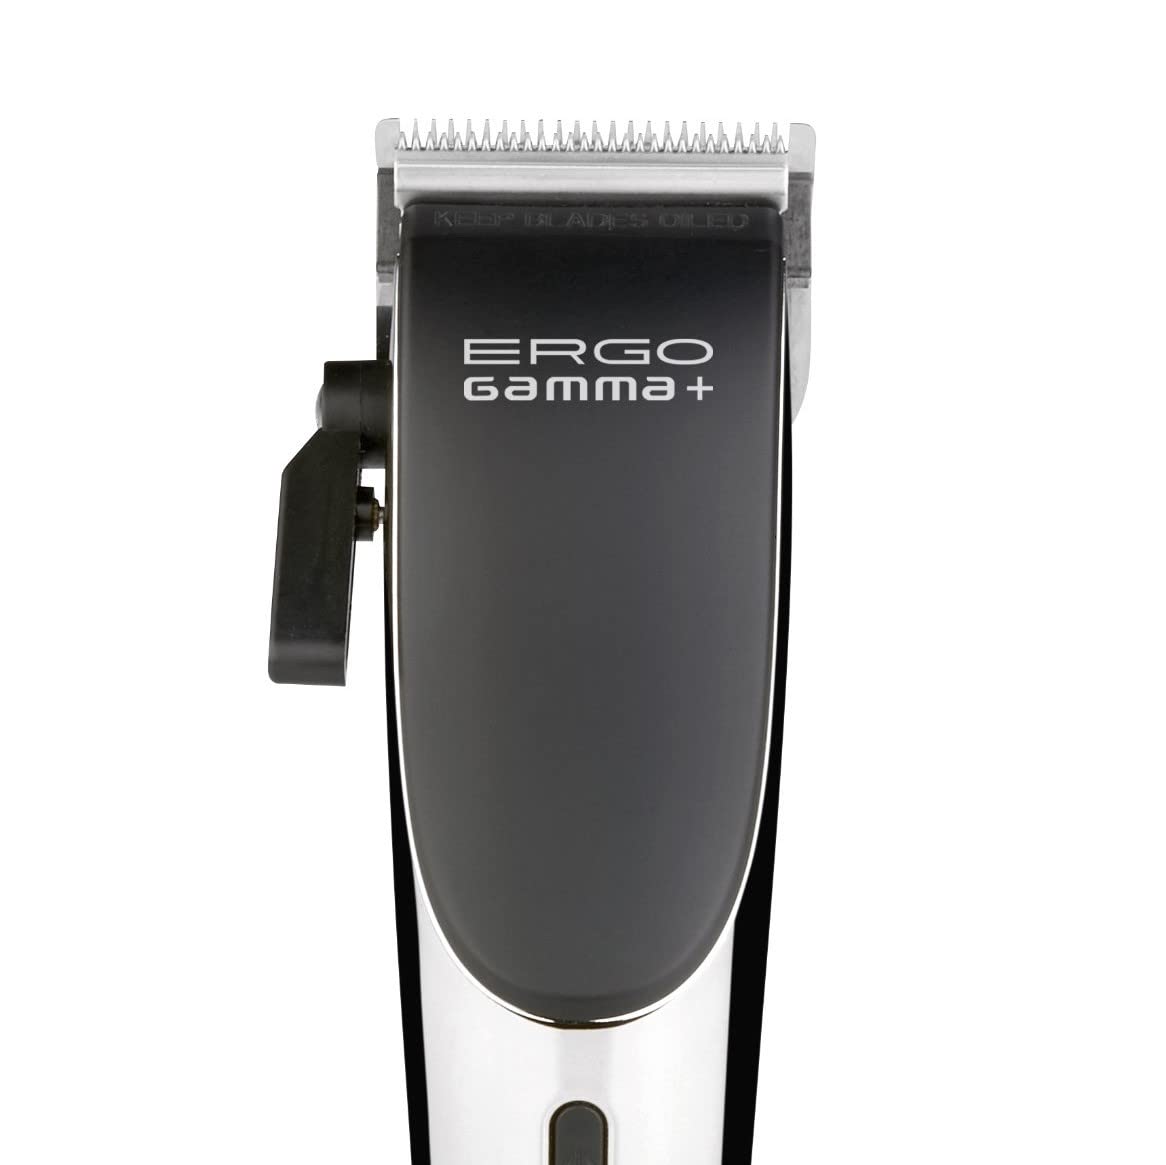 GAMMA+ XErgo Professional Hair Clipper and Ergo Professional Hair Clipper with Microchipped Magnetic Motors